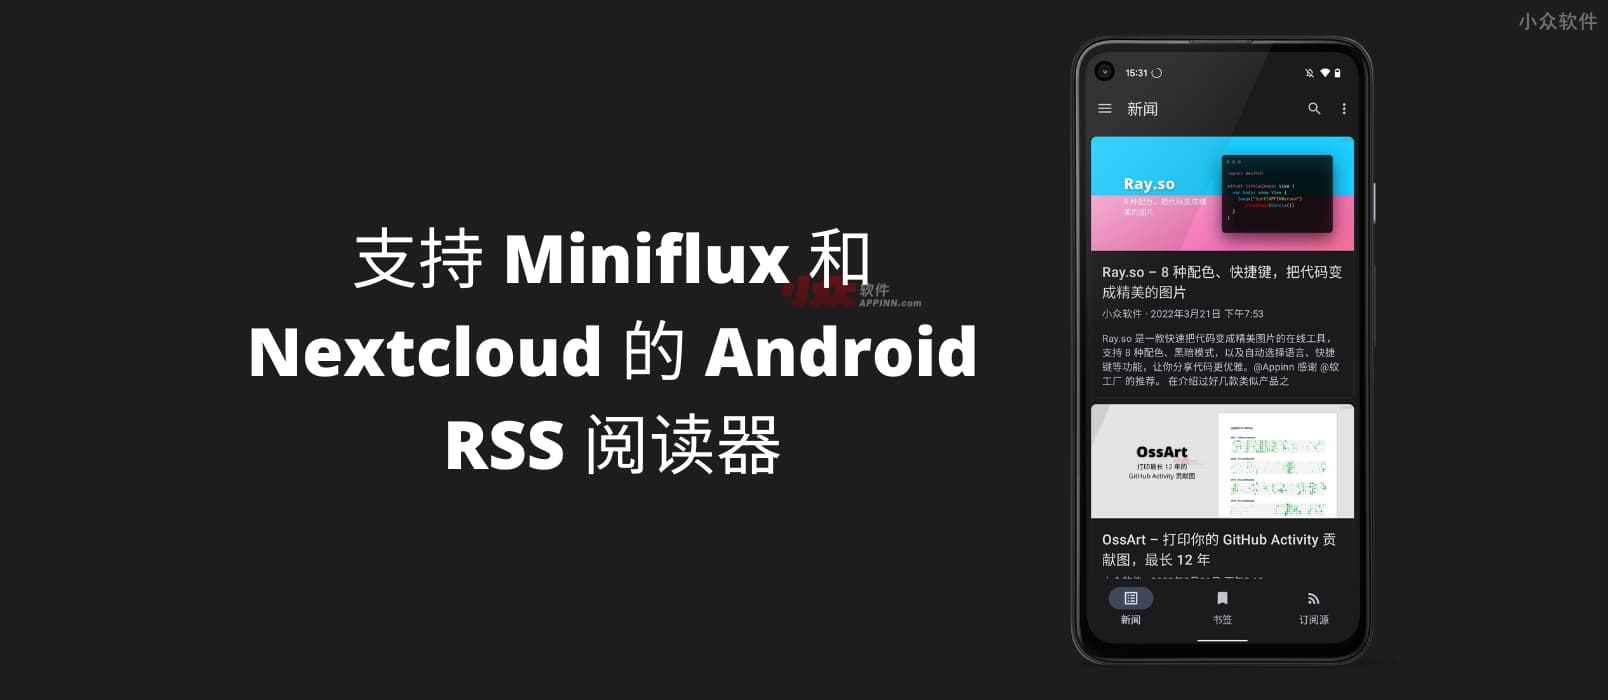 News 是一款可以在旧手机上流畅使用的 Android RSS 阅读器，支持使用 Miniflux 和 Nextcloud 作为订阅源，也可以独立订阅，简单易用。@Appinn 